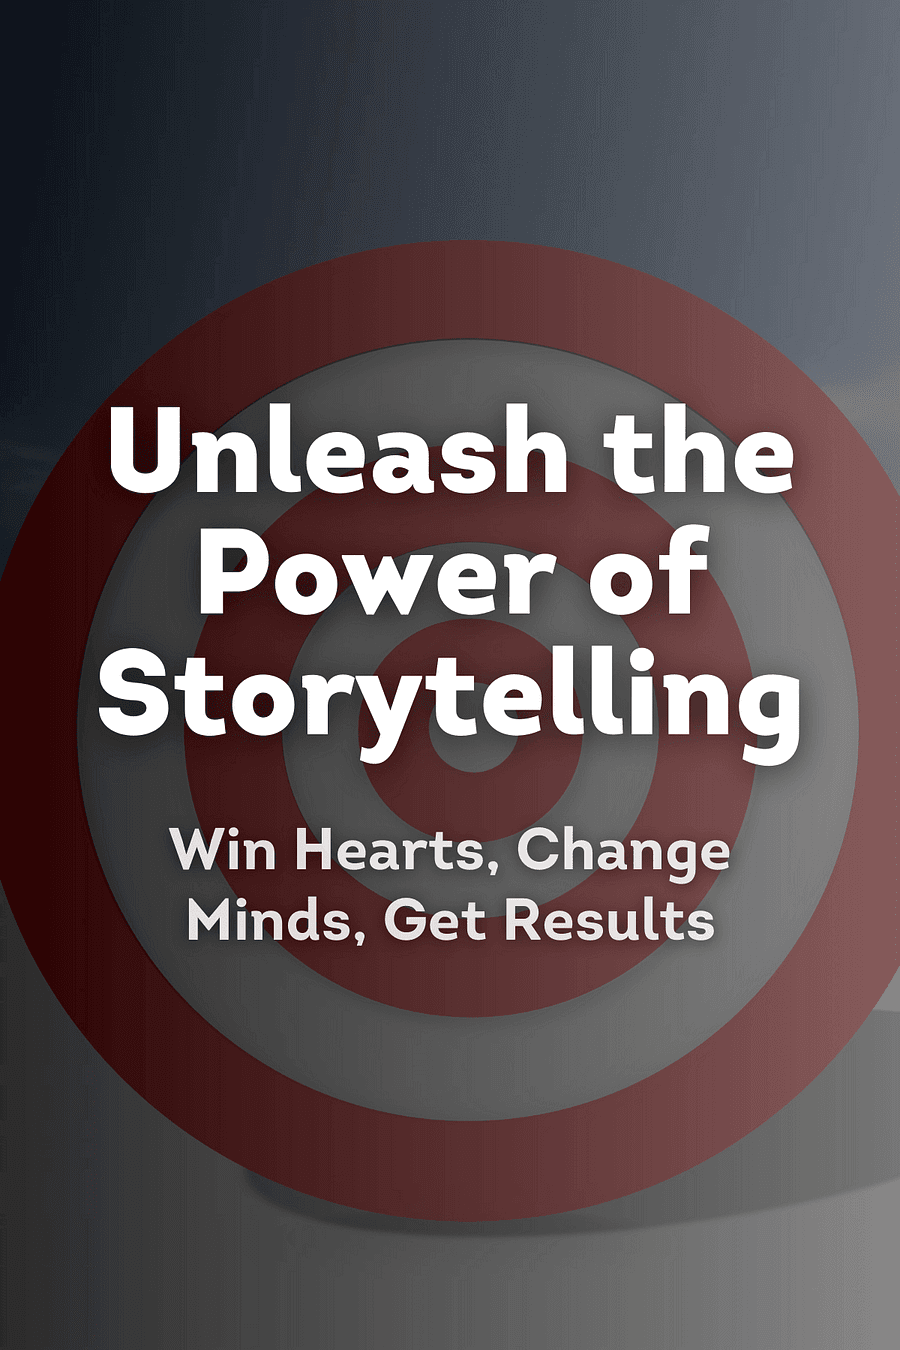 Unleash the Power of Storytelling by Rob Biesenbach - Book Summary